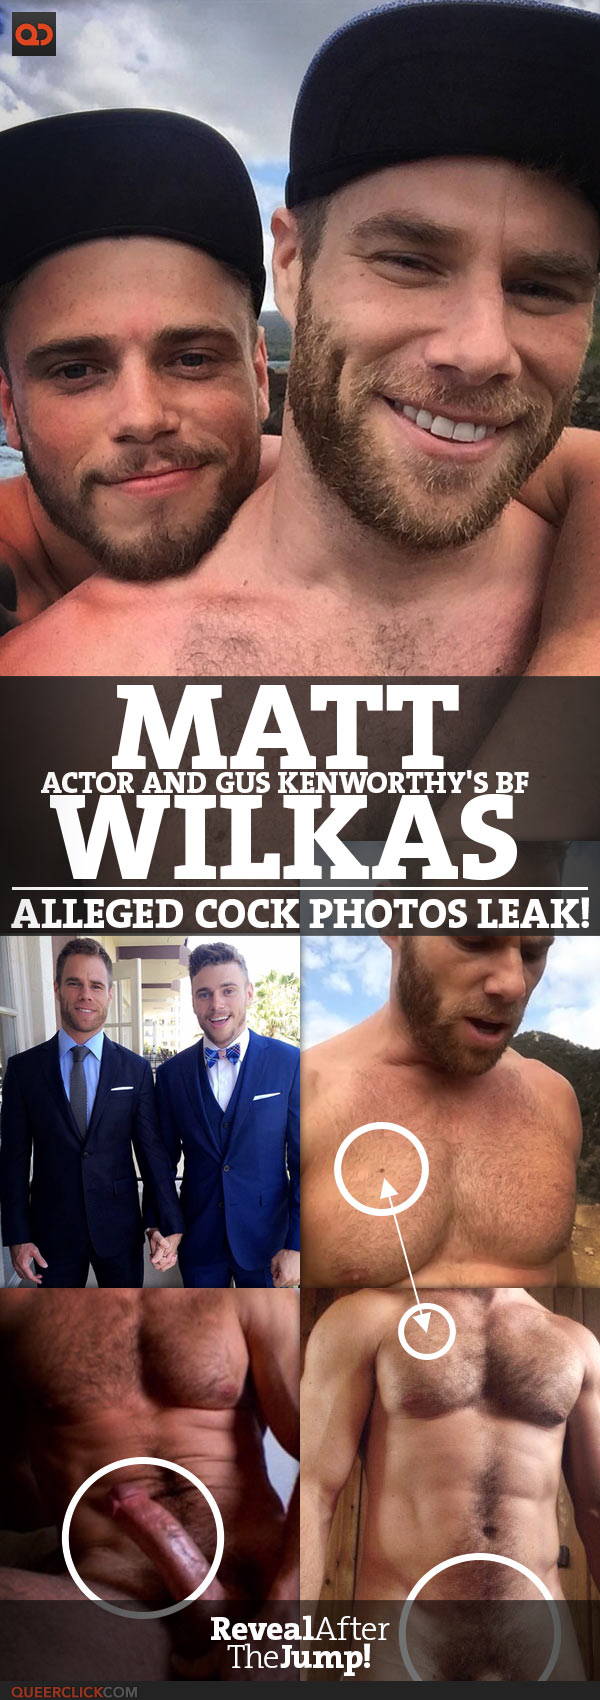 Matt Wilkas, Actor And Gus Kenworthy's BF, Alleged Cock Photos Leak!